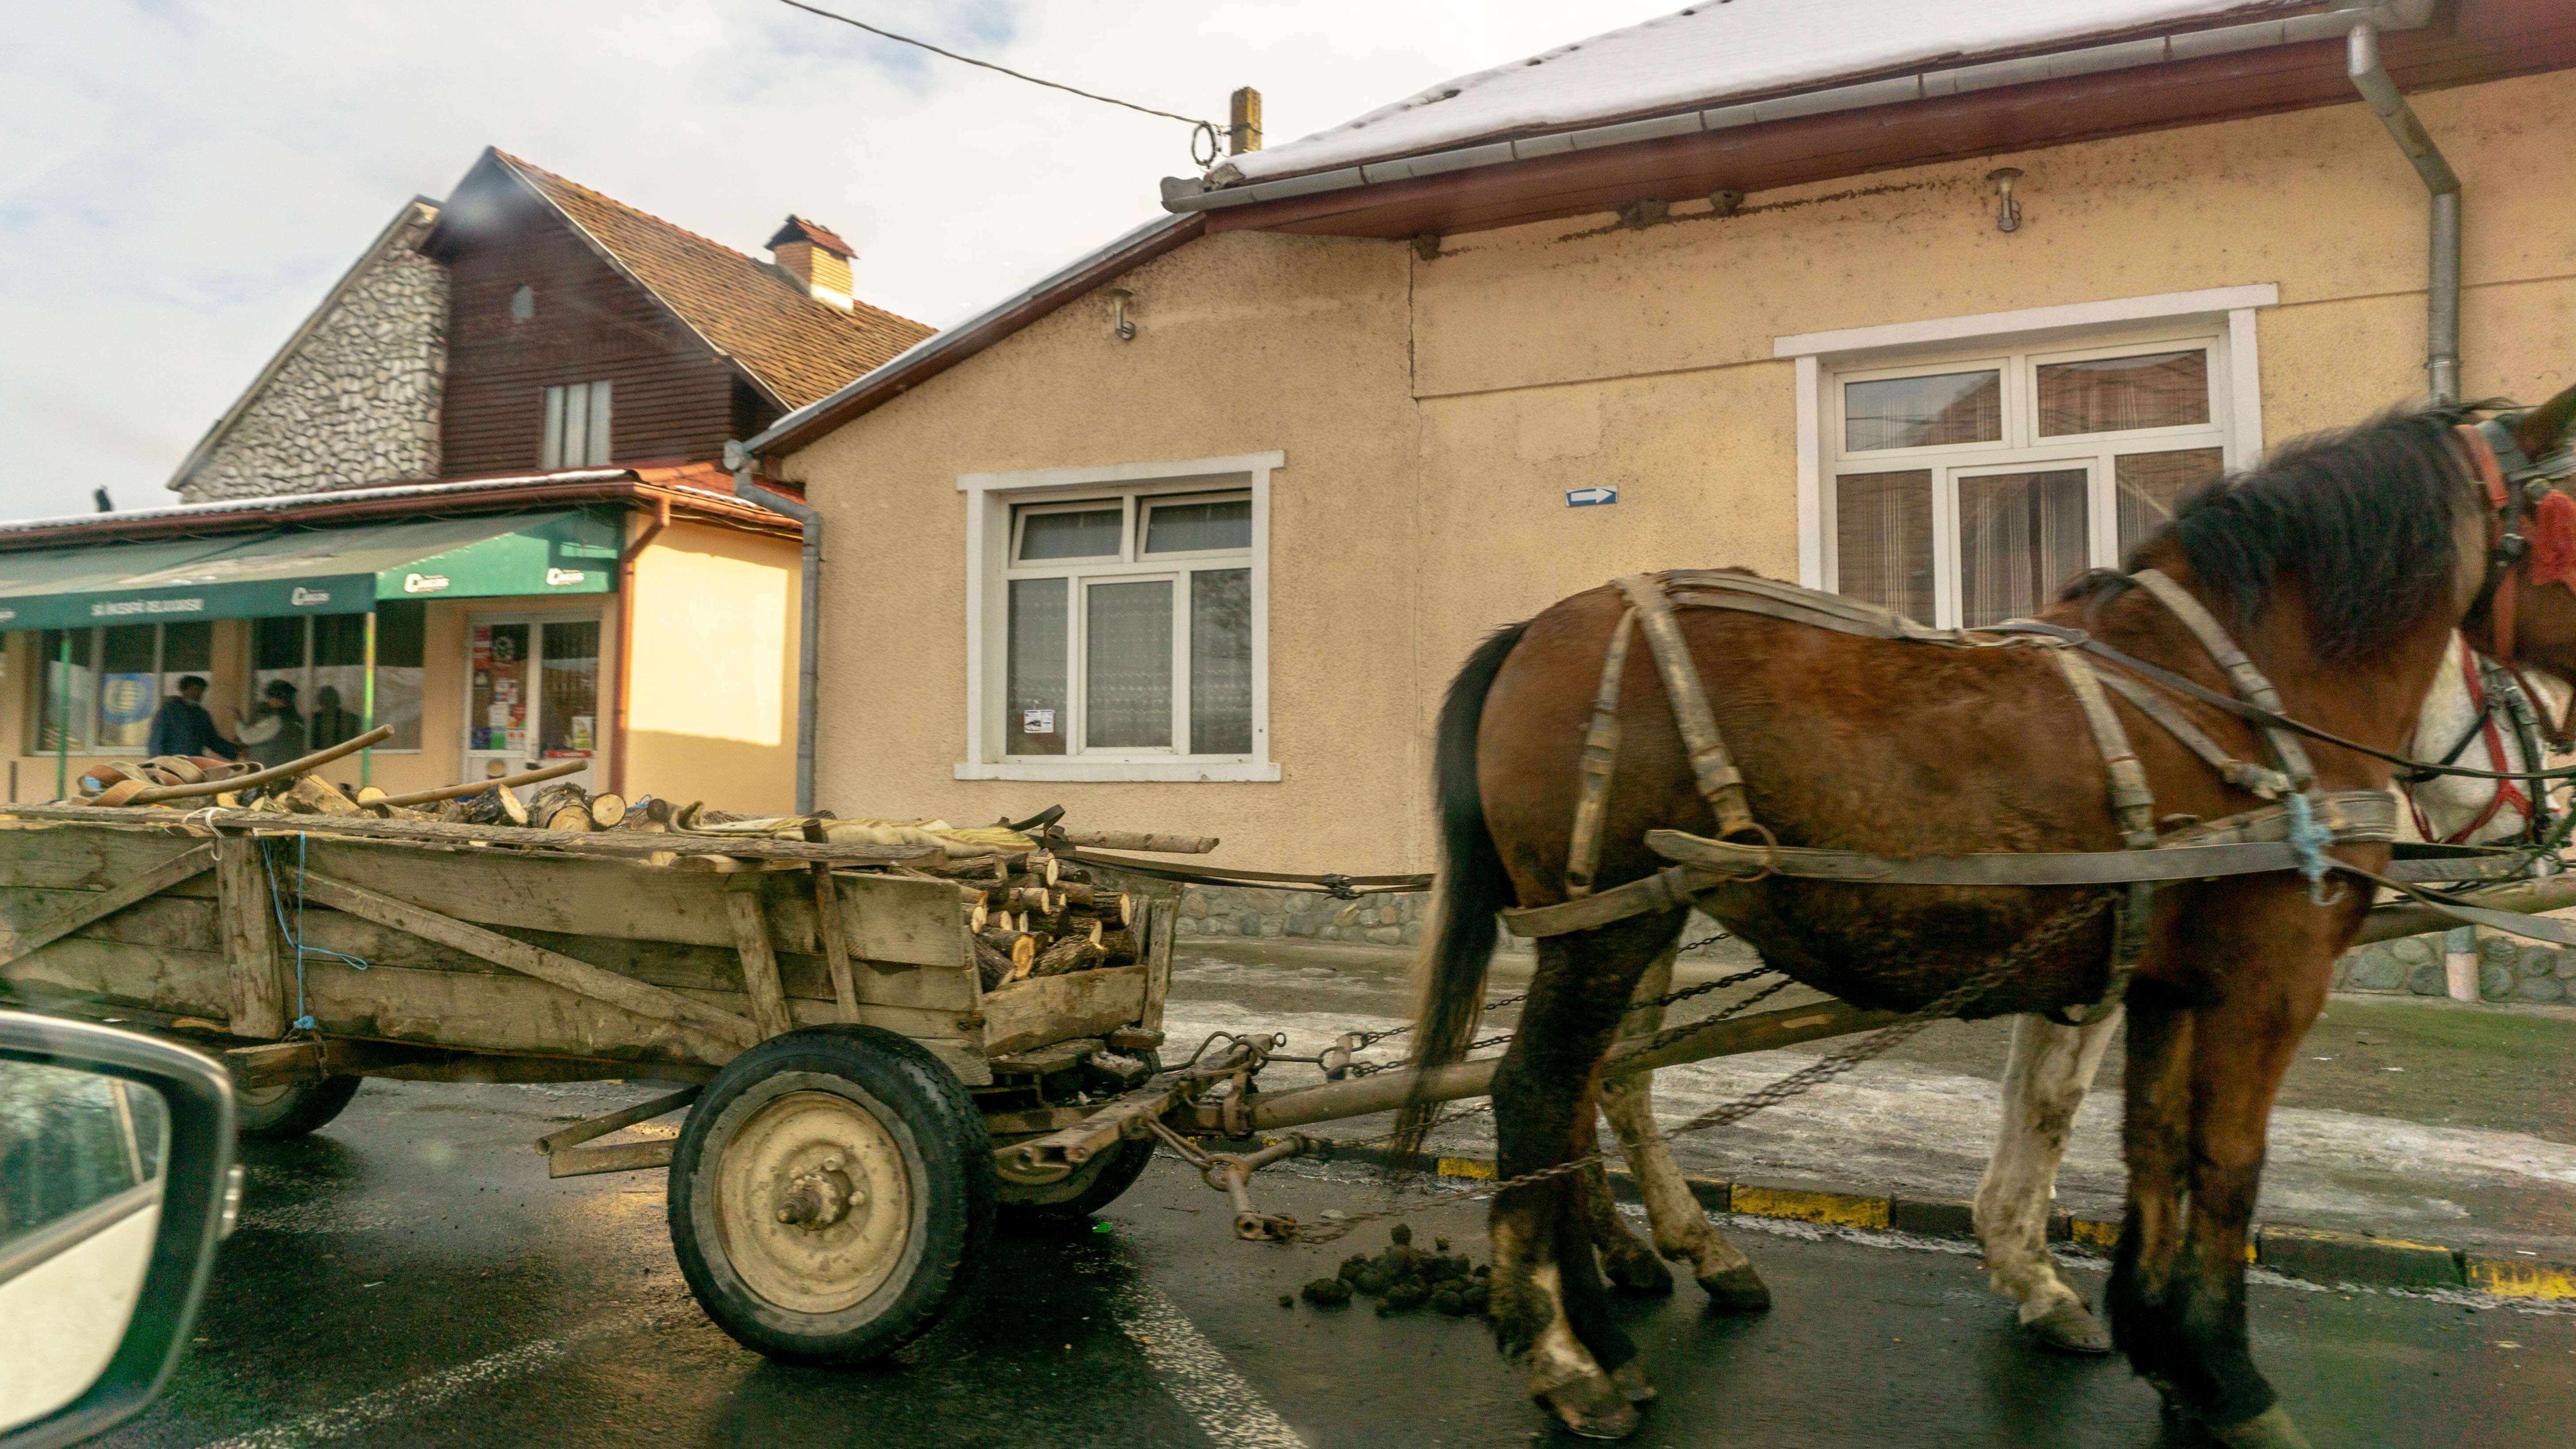 Winter Travel in Transylvania, Romania – Outside This Small Town